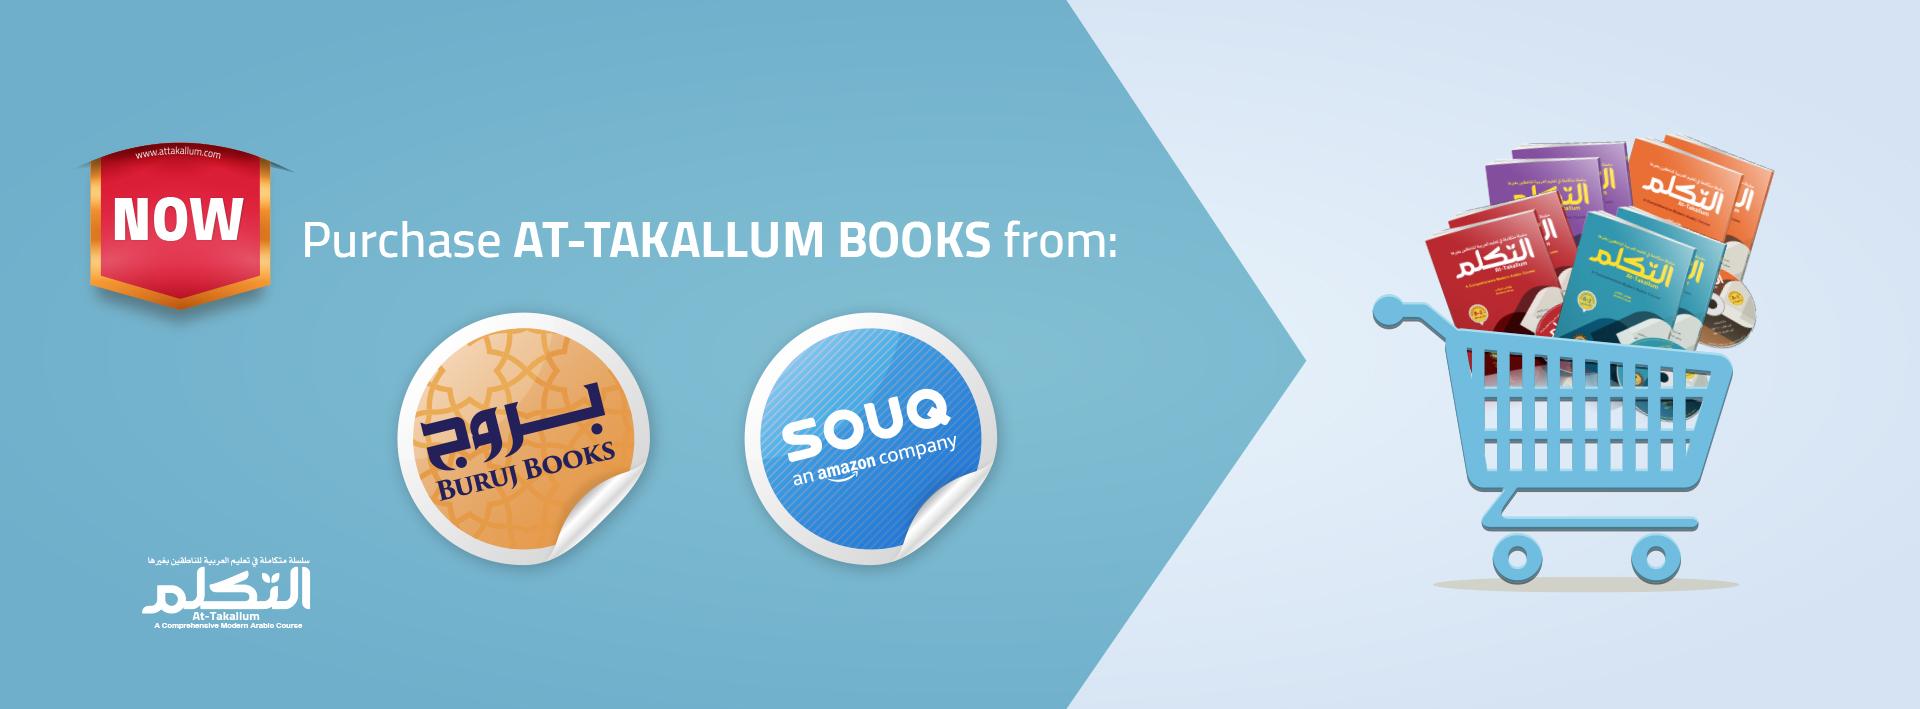 purchase At-takallum books